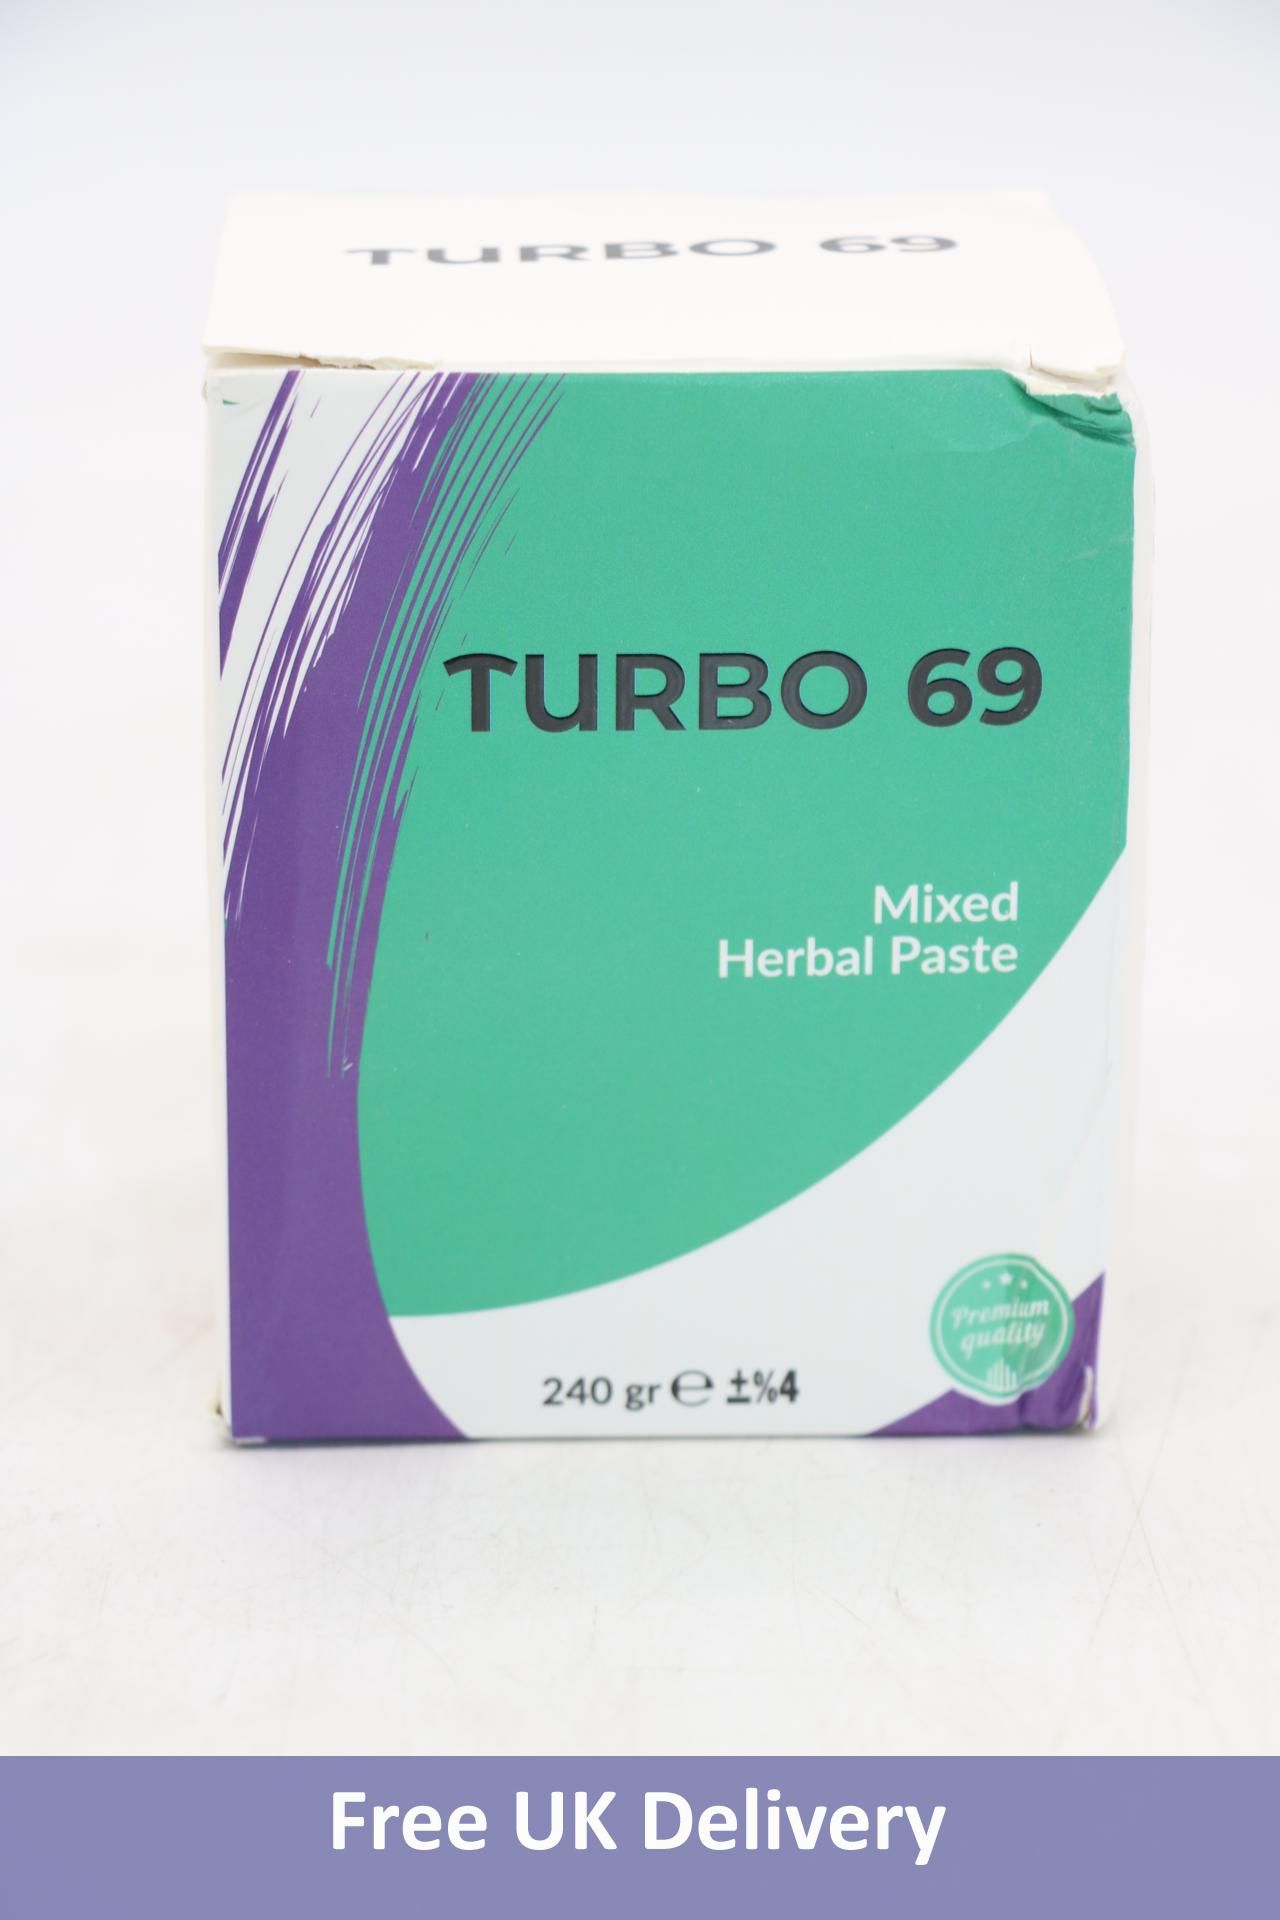 Two boxes of Turbo 69 Mixed Herbal Paste, 240g, White/Green